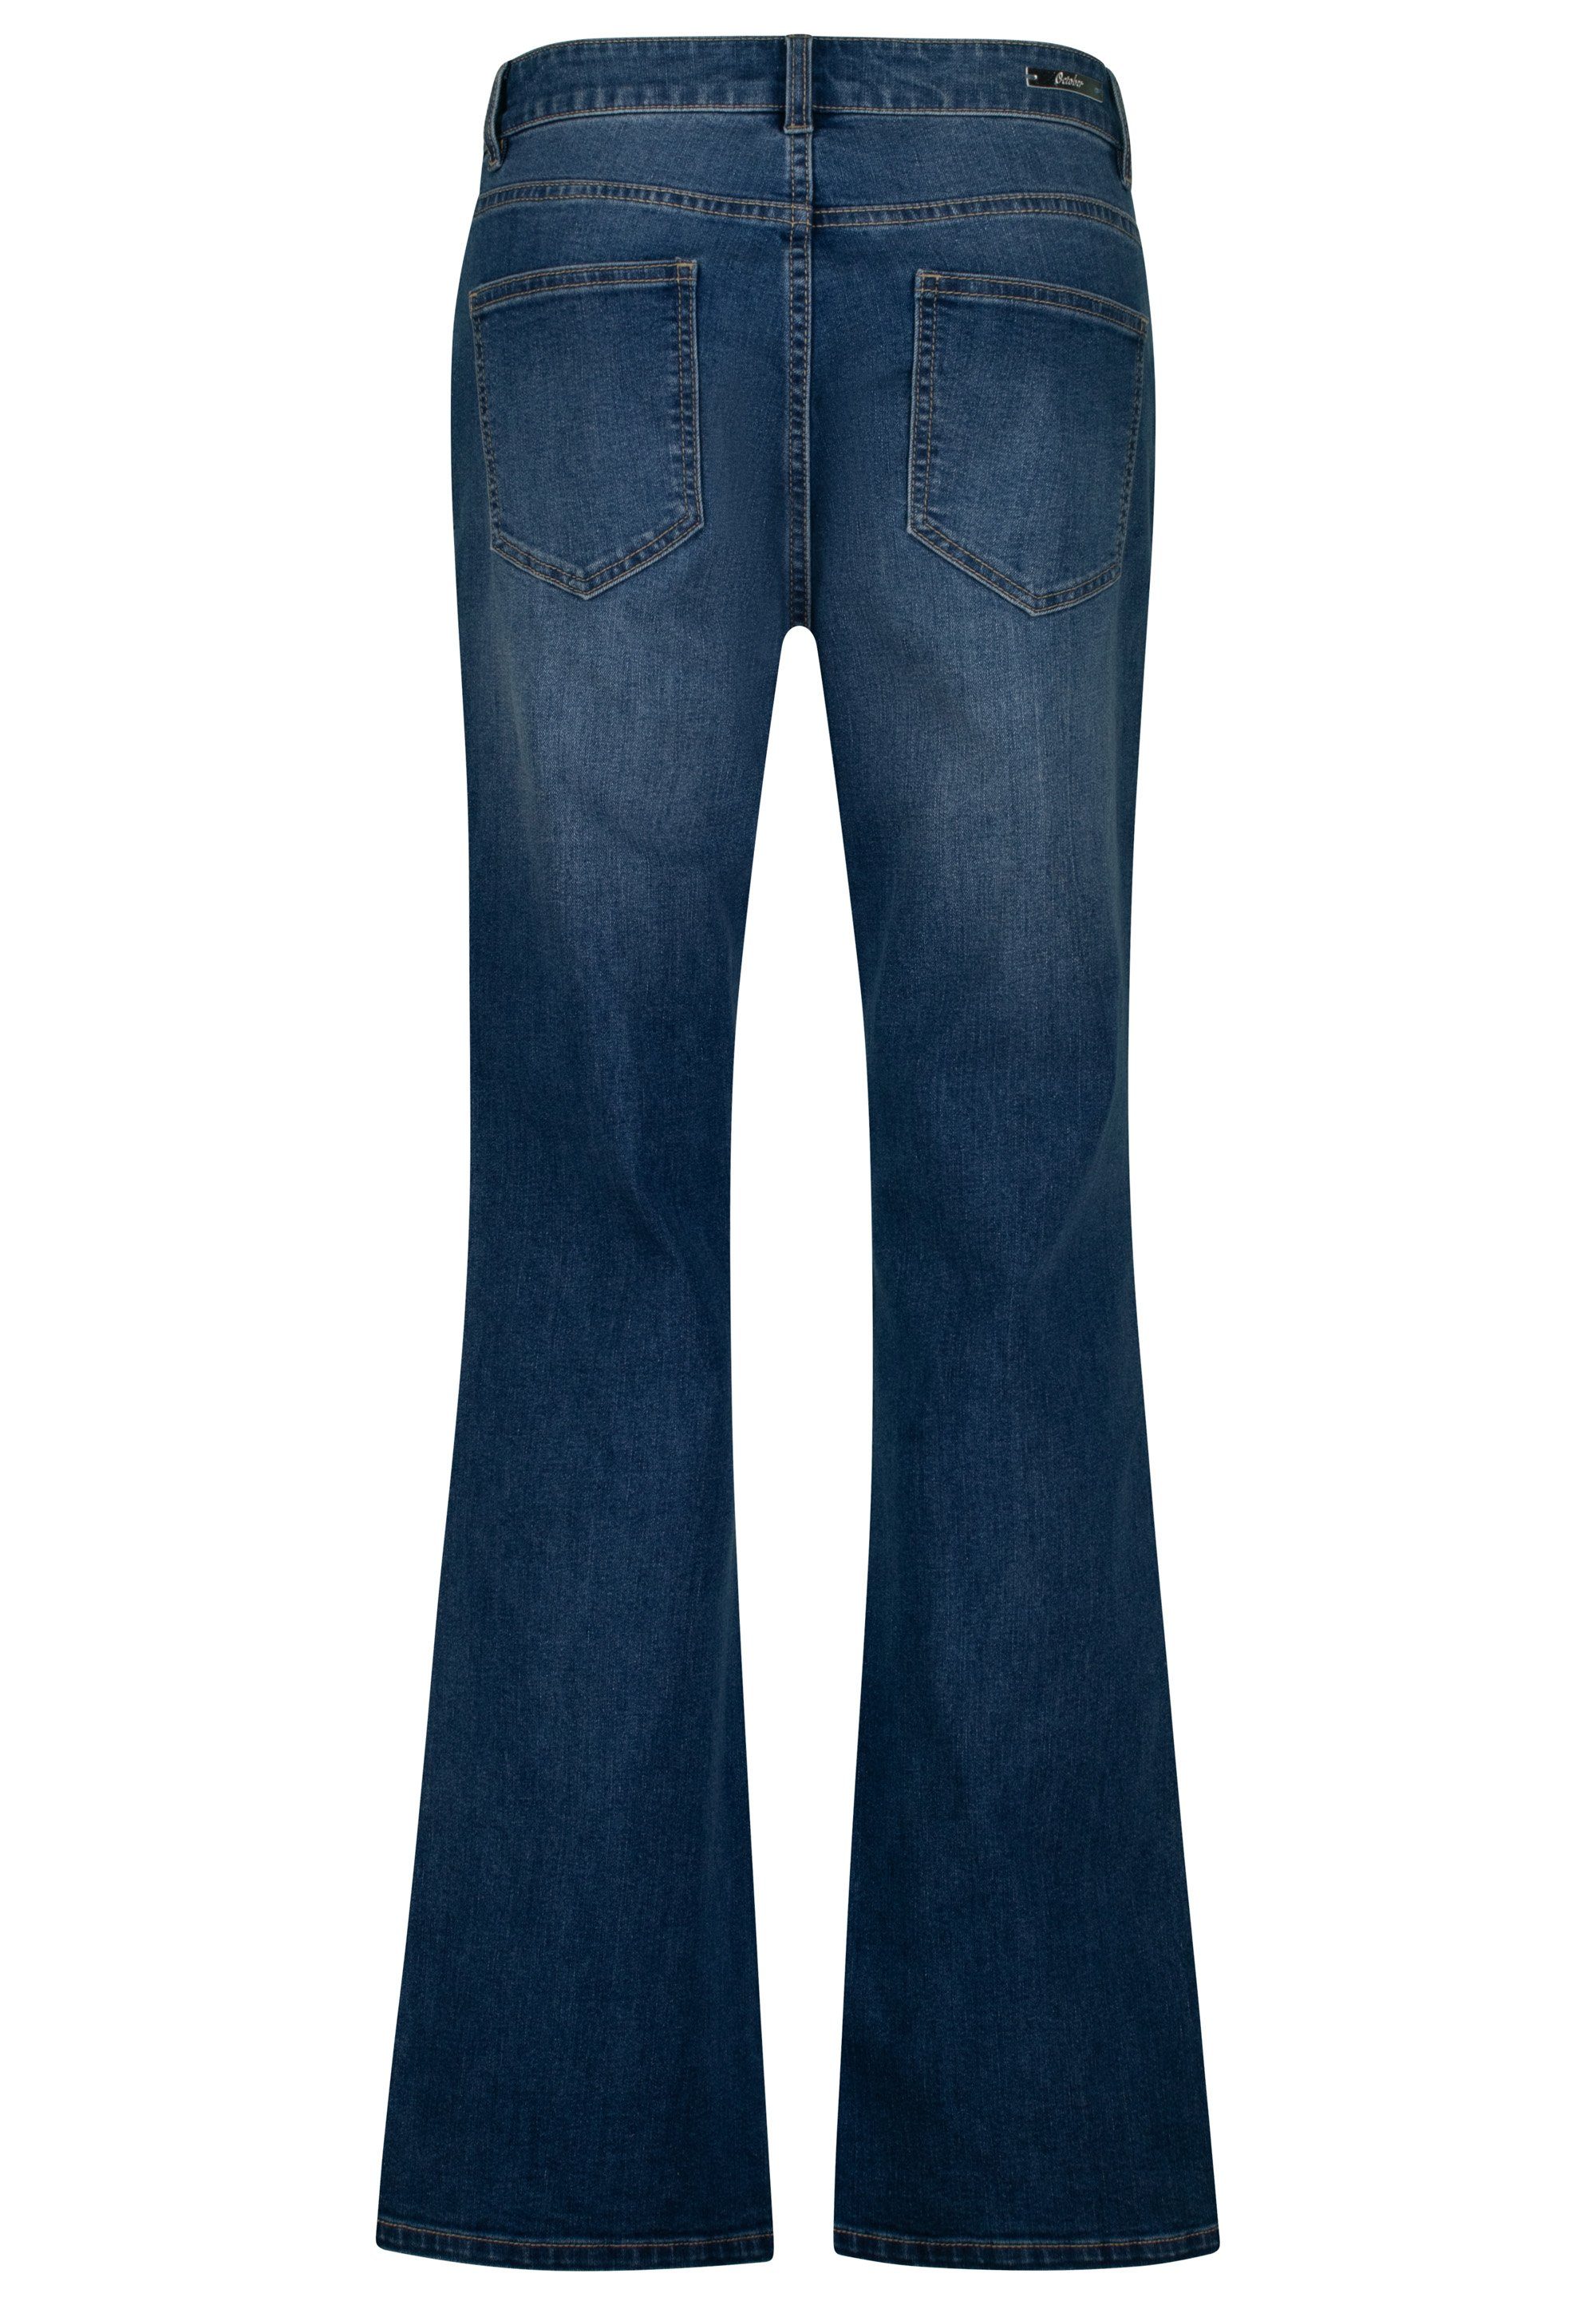 Jeans tollen im Bootcut-Schnitt Bequeme October